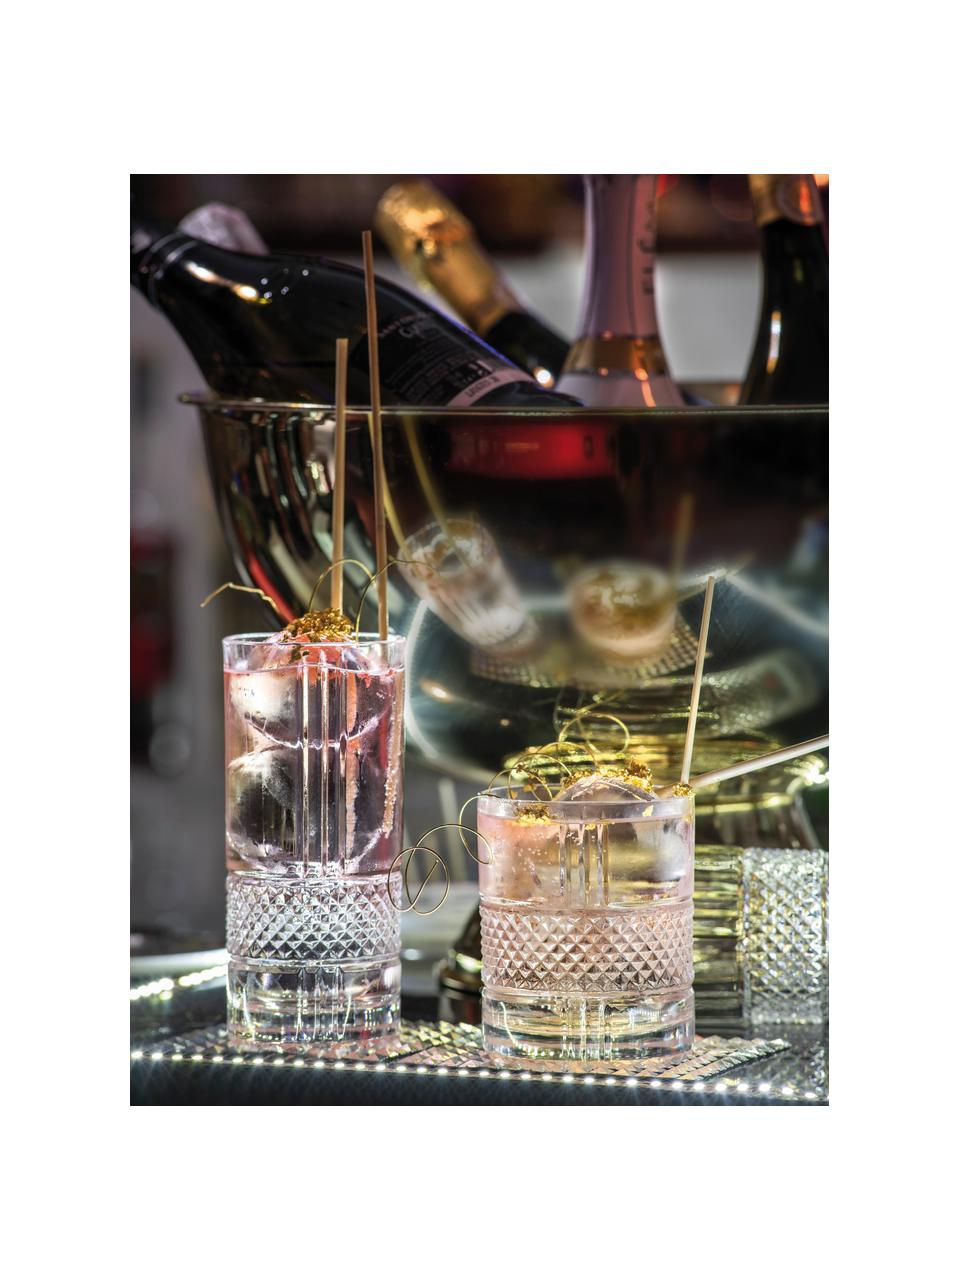 Kristallen glazen Brillante met reliëf, 6 stuks, Kristalglas, Transparant, Ø 7 x H 15 cm, 350 ml